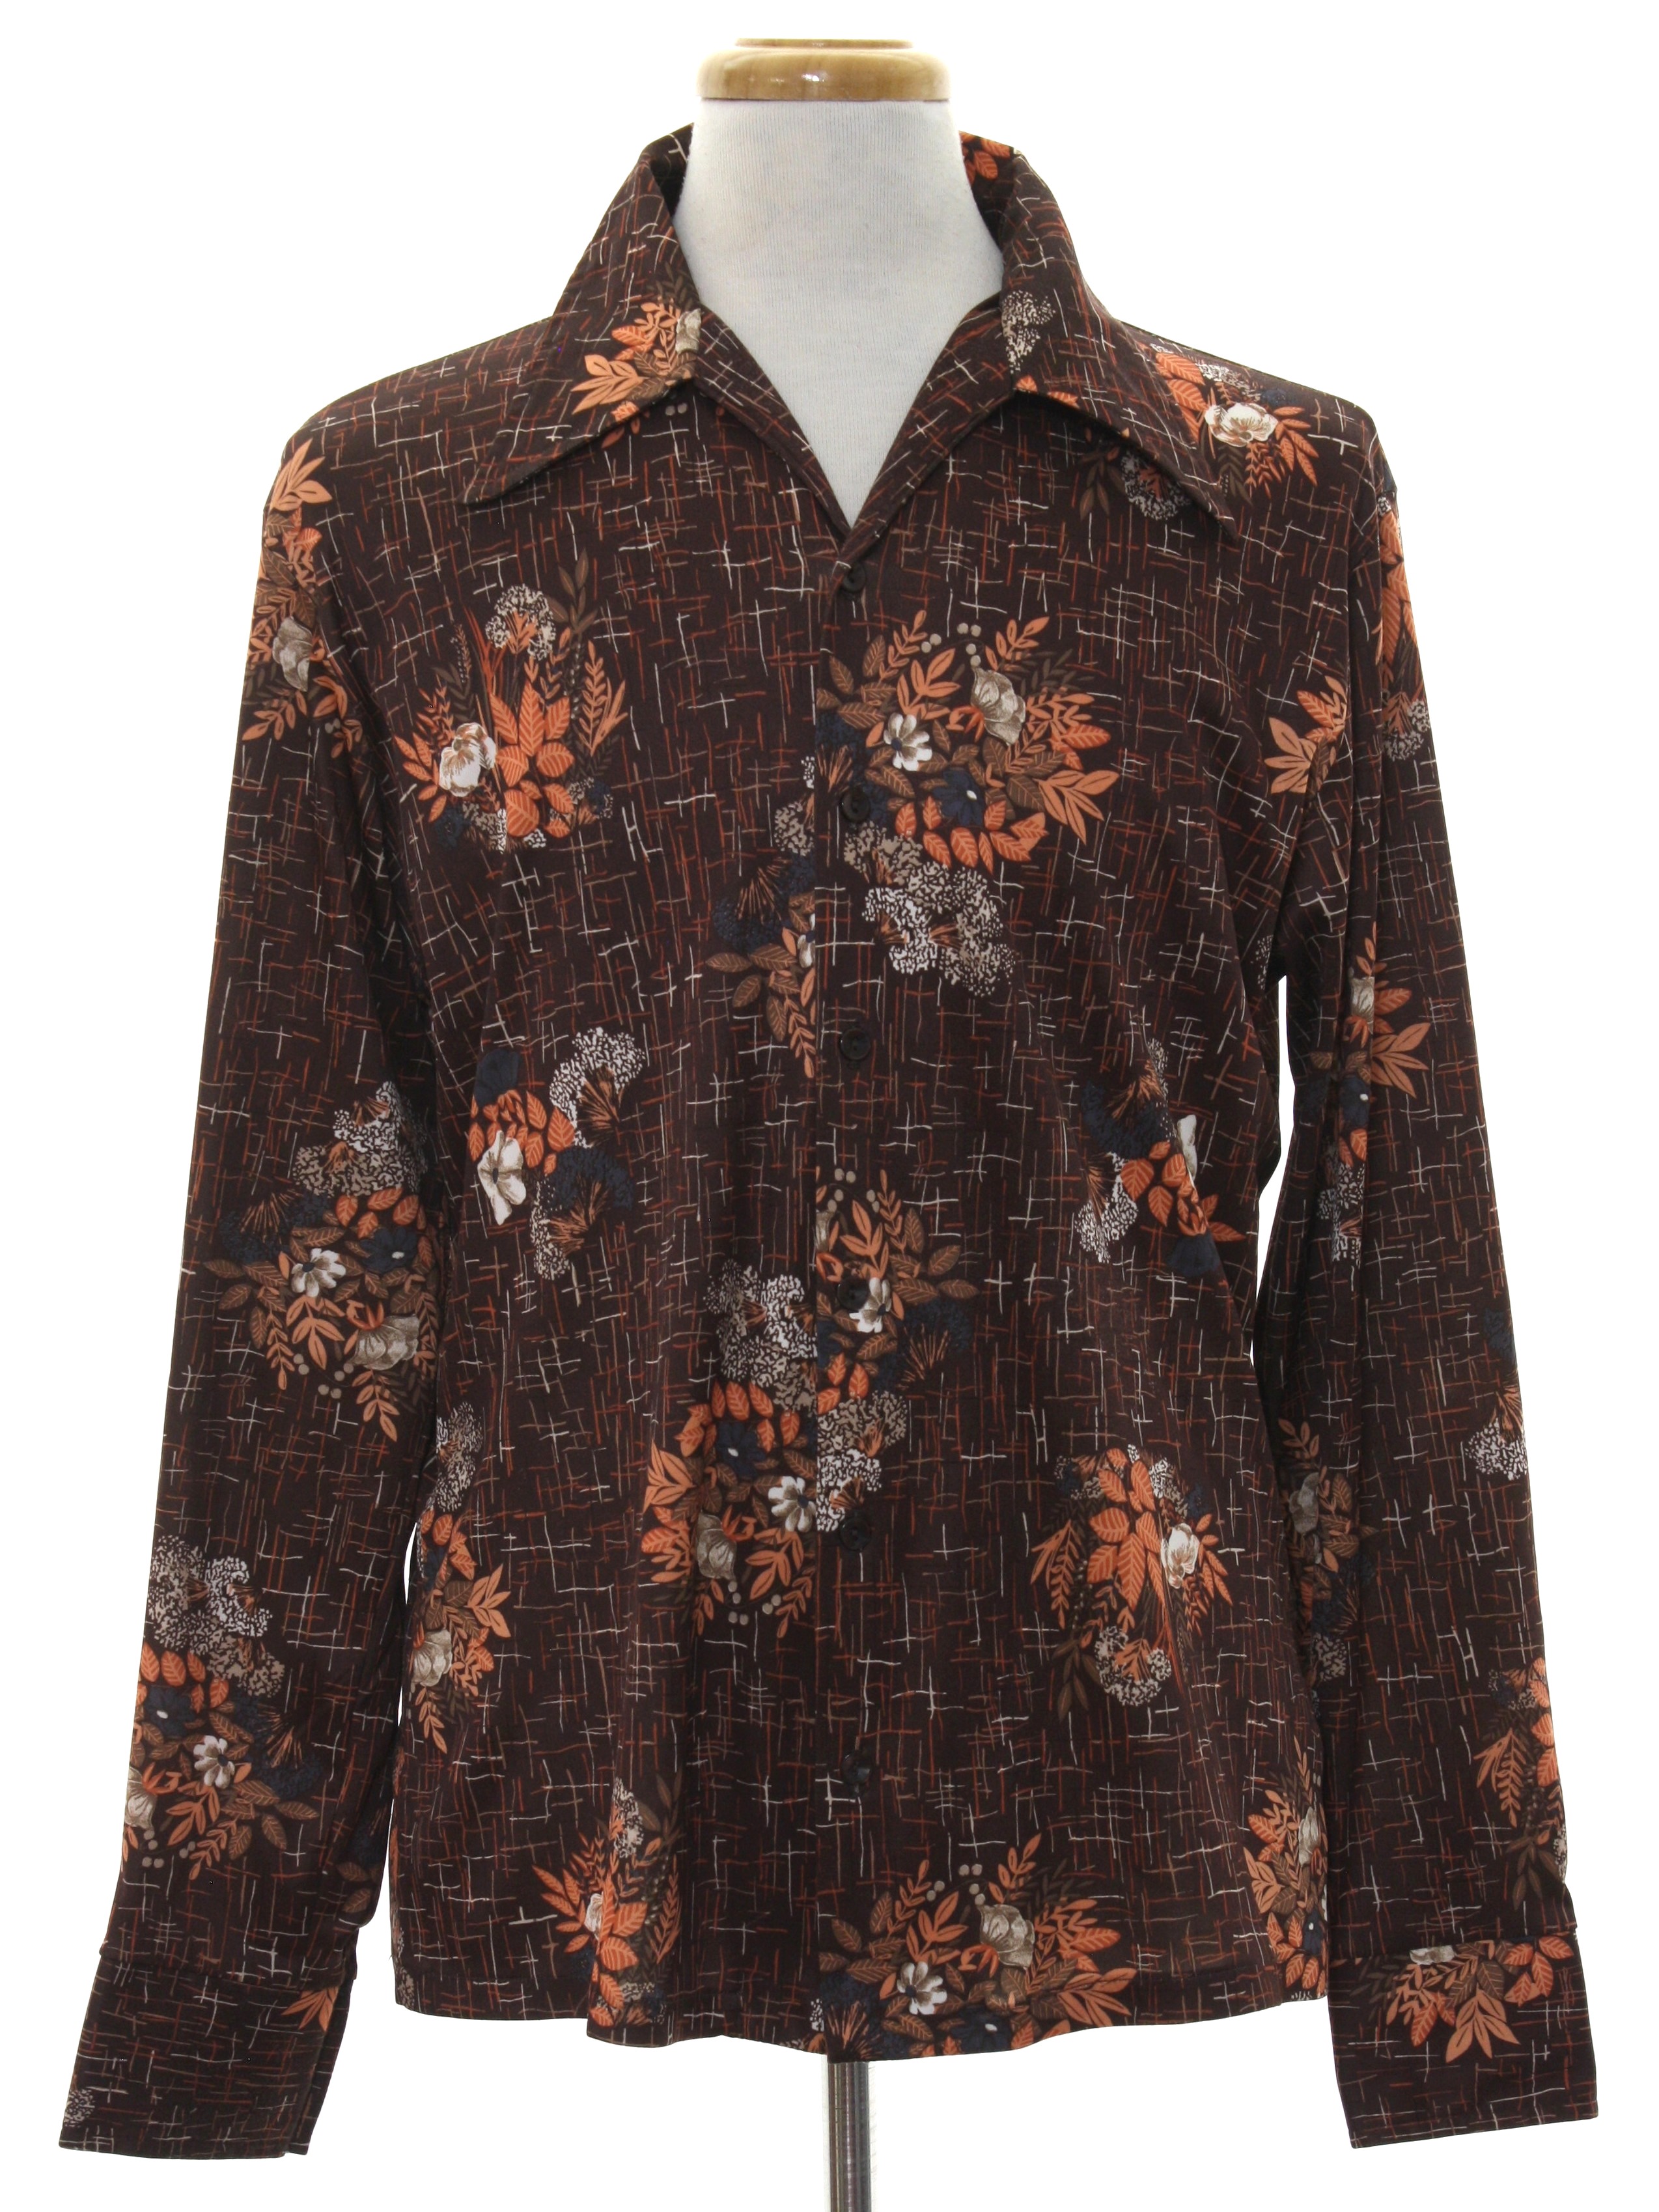 70s Print Disco Shirt (Care Label): 70s -Care Label- Mens dark brown ...